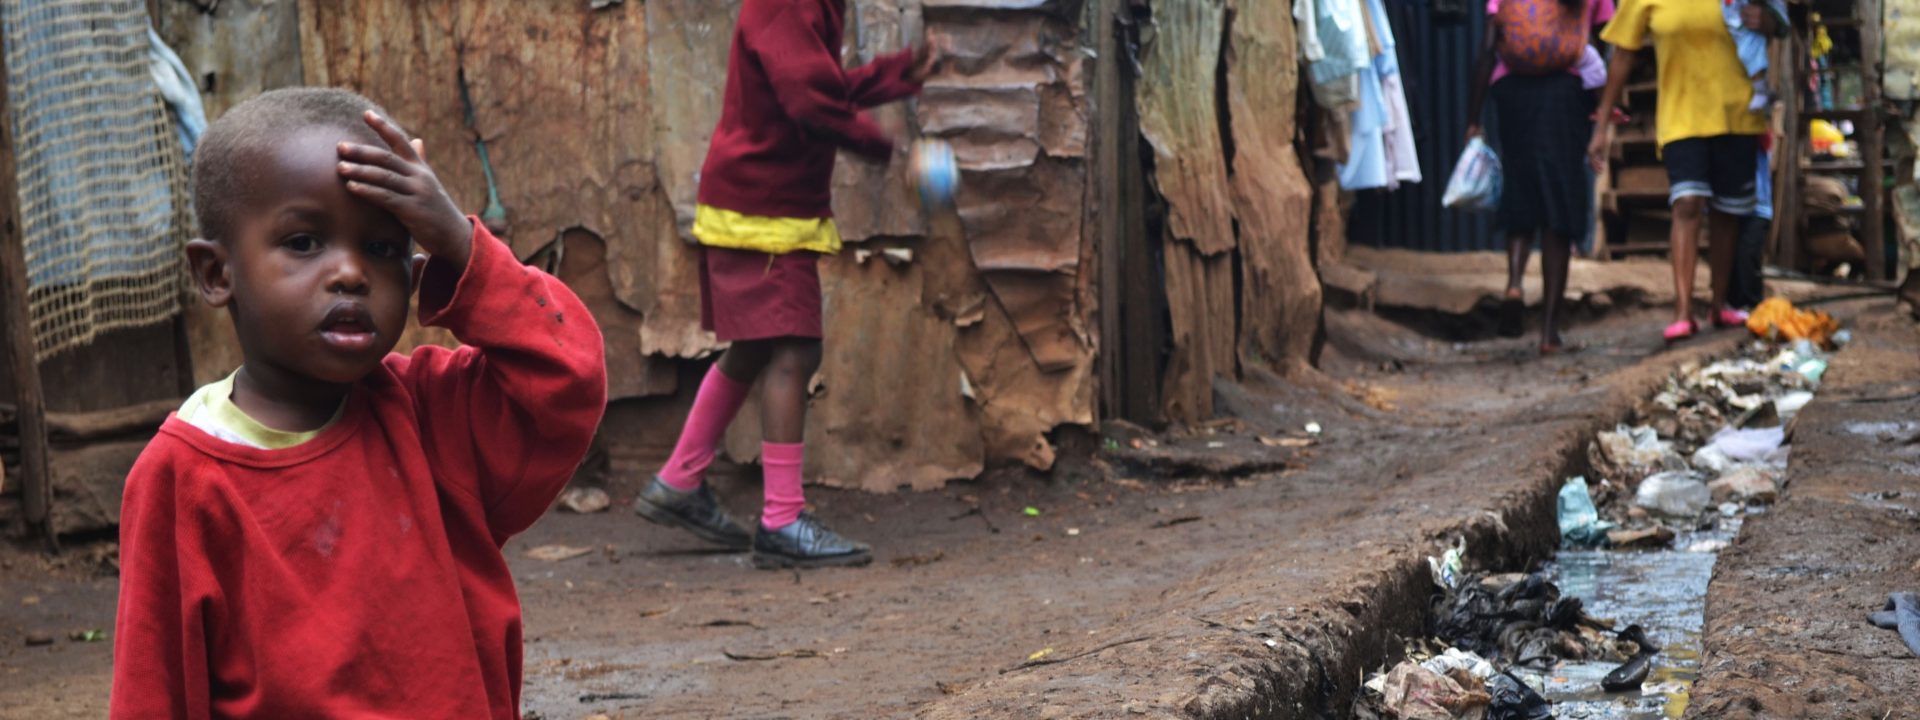 Kibera, the slum as a symptom